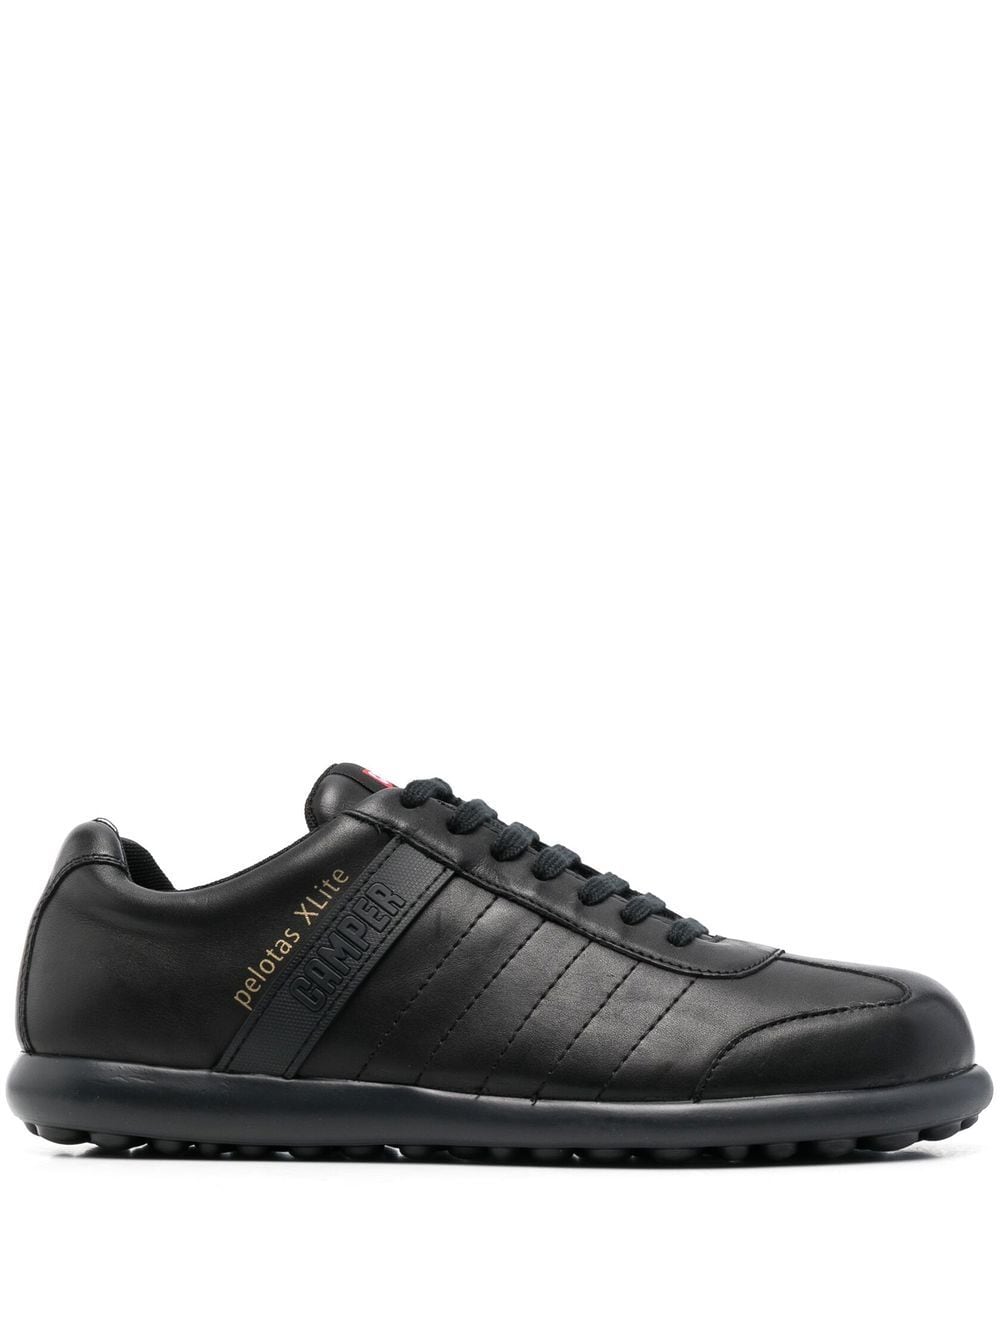 Camper Pelotas XLite leather sneakers - Black von Camper